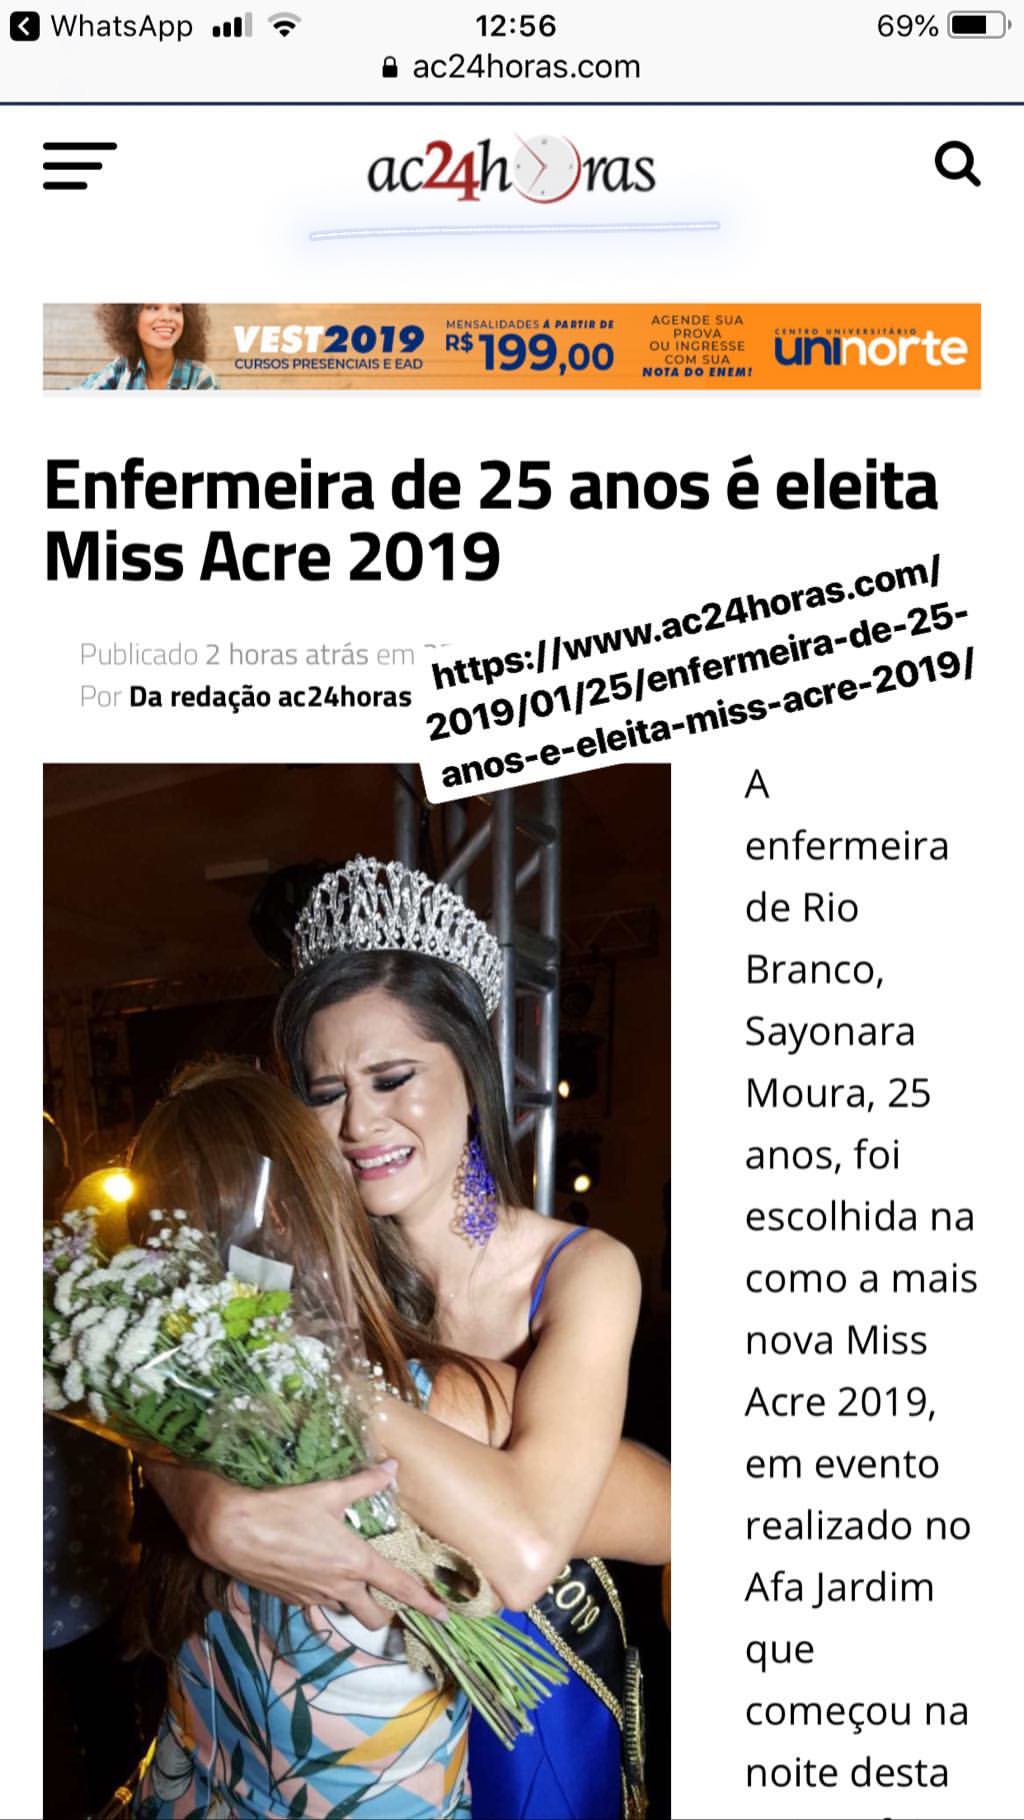 sayonara moura, miss acre 2019. - Página 2 49373710